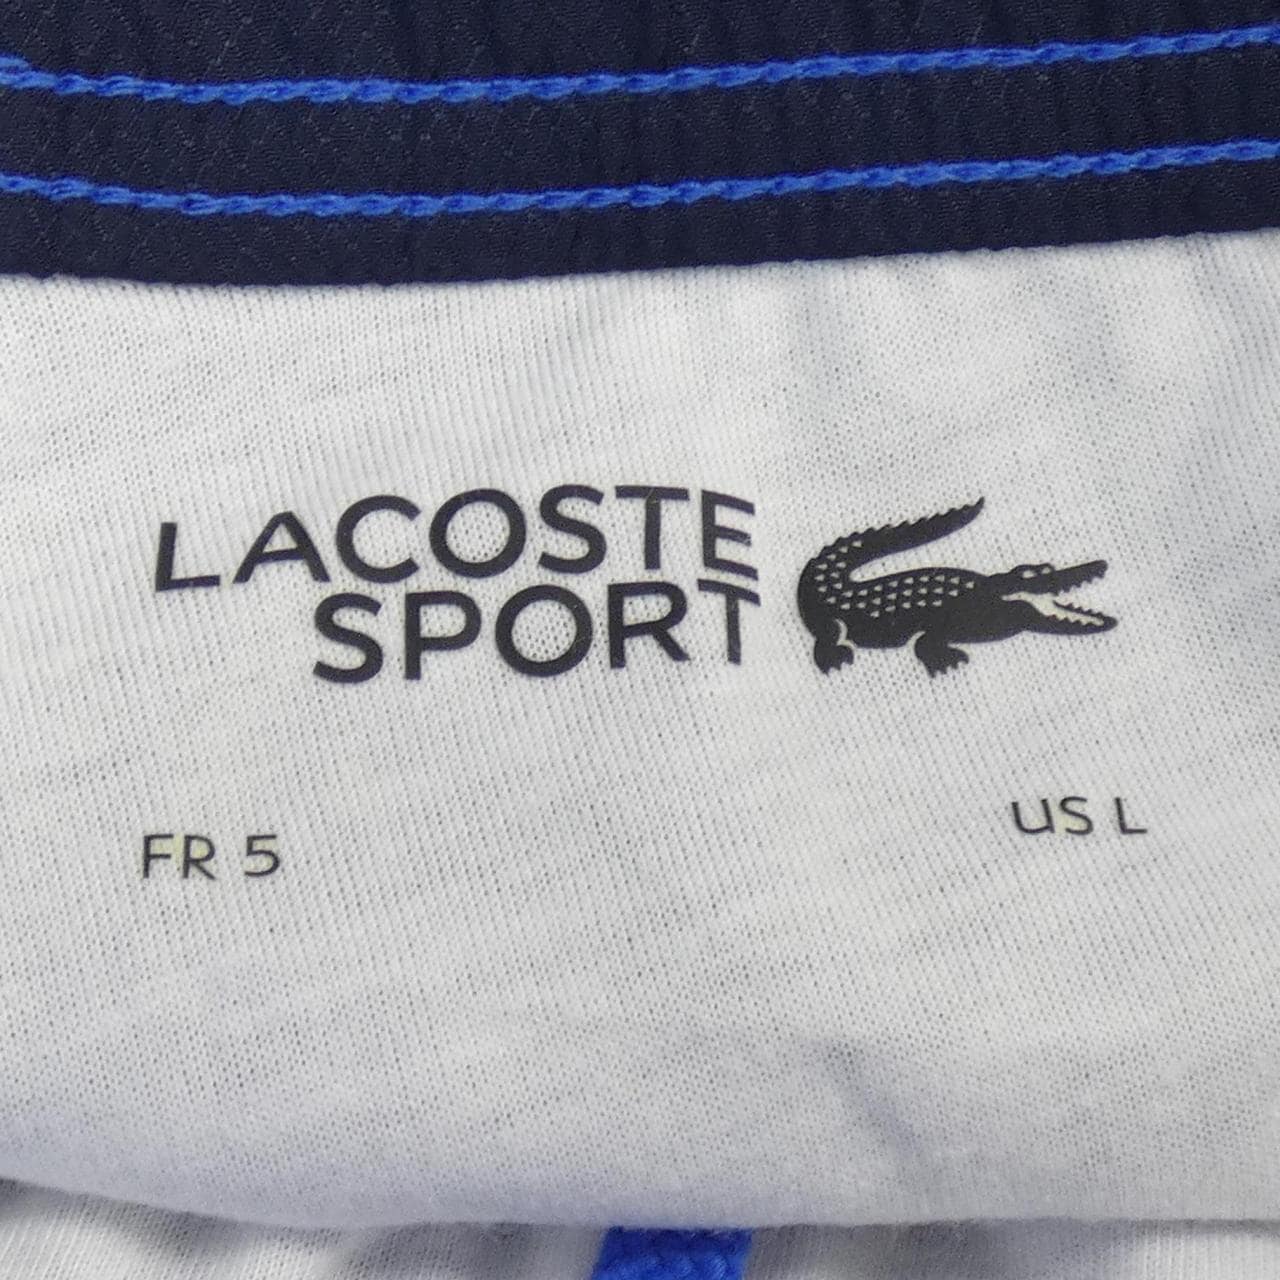 Lacoste sports LACOSTE SPORT pants